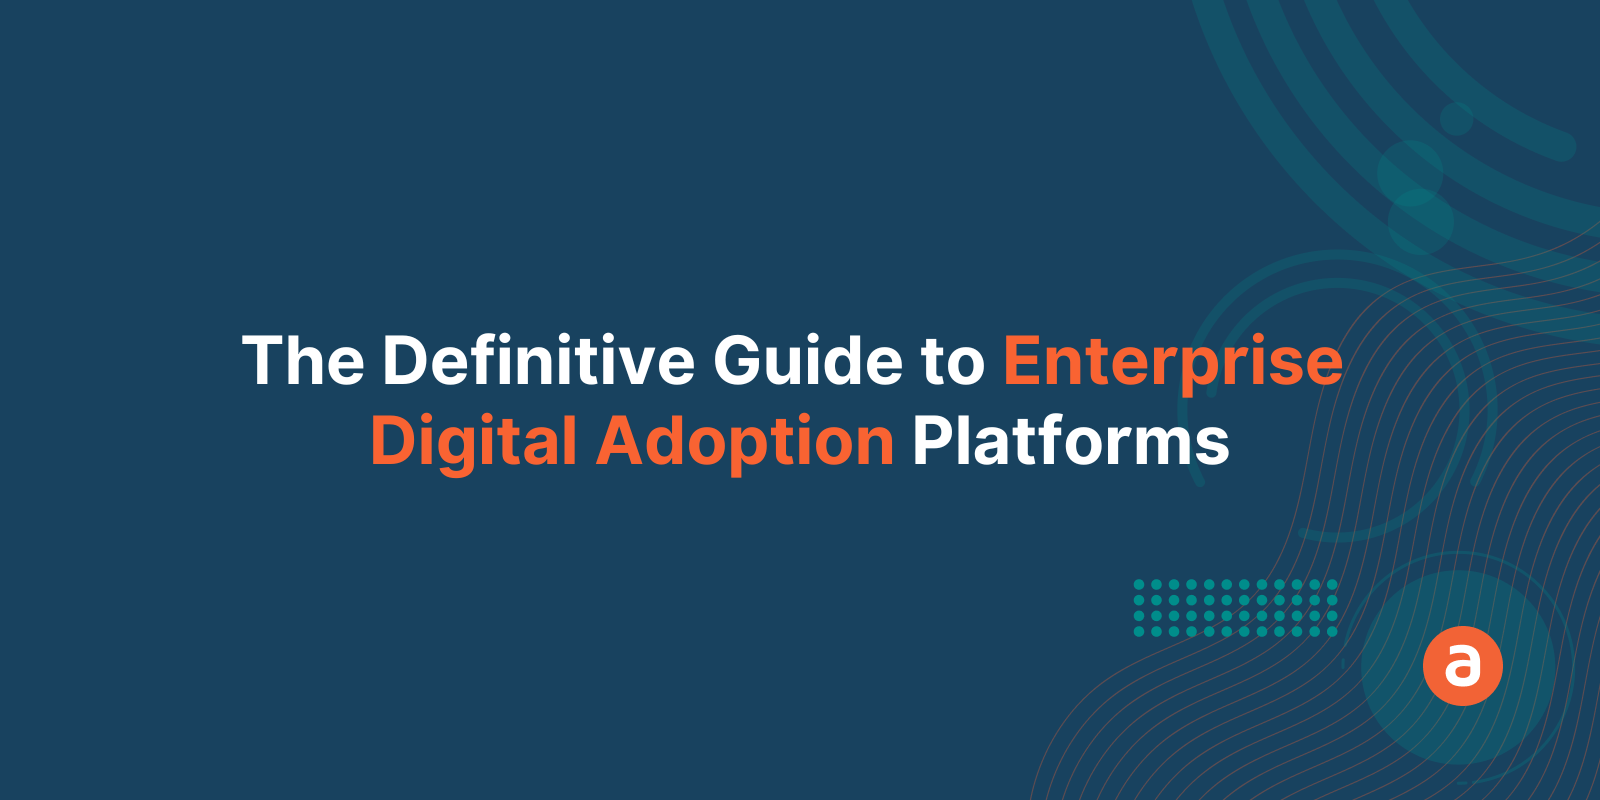 The Definitive Guide to Enterprise Digital Adoption Platforms